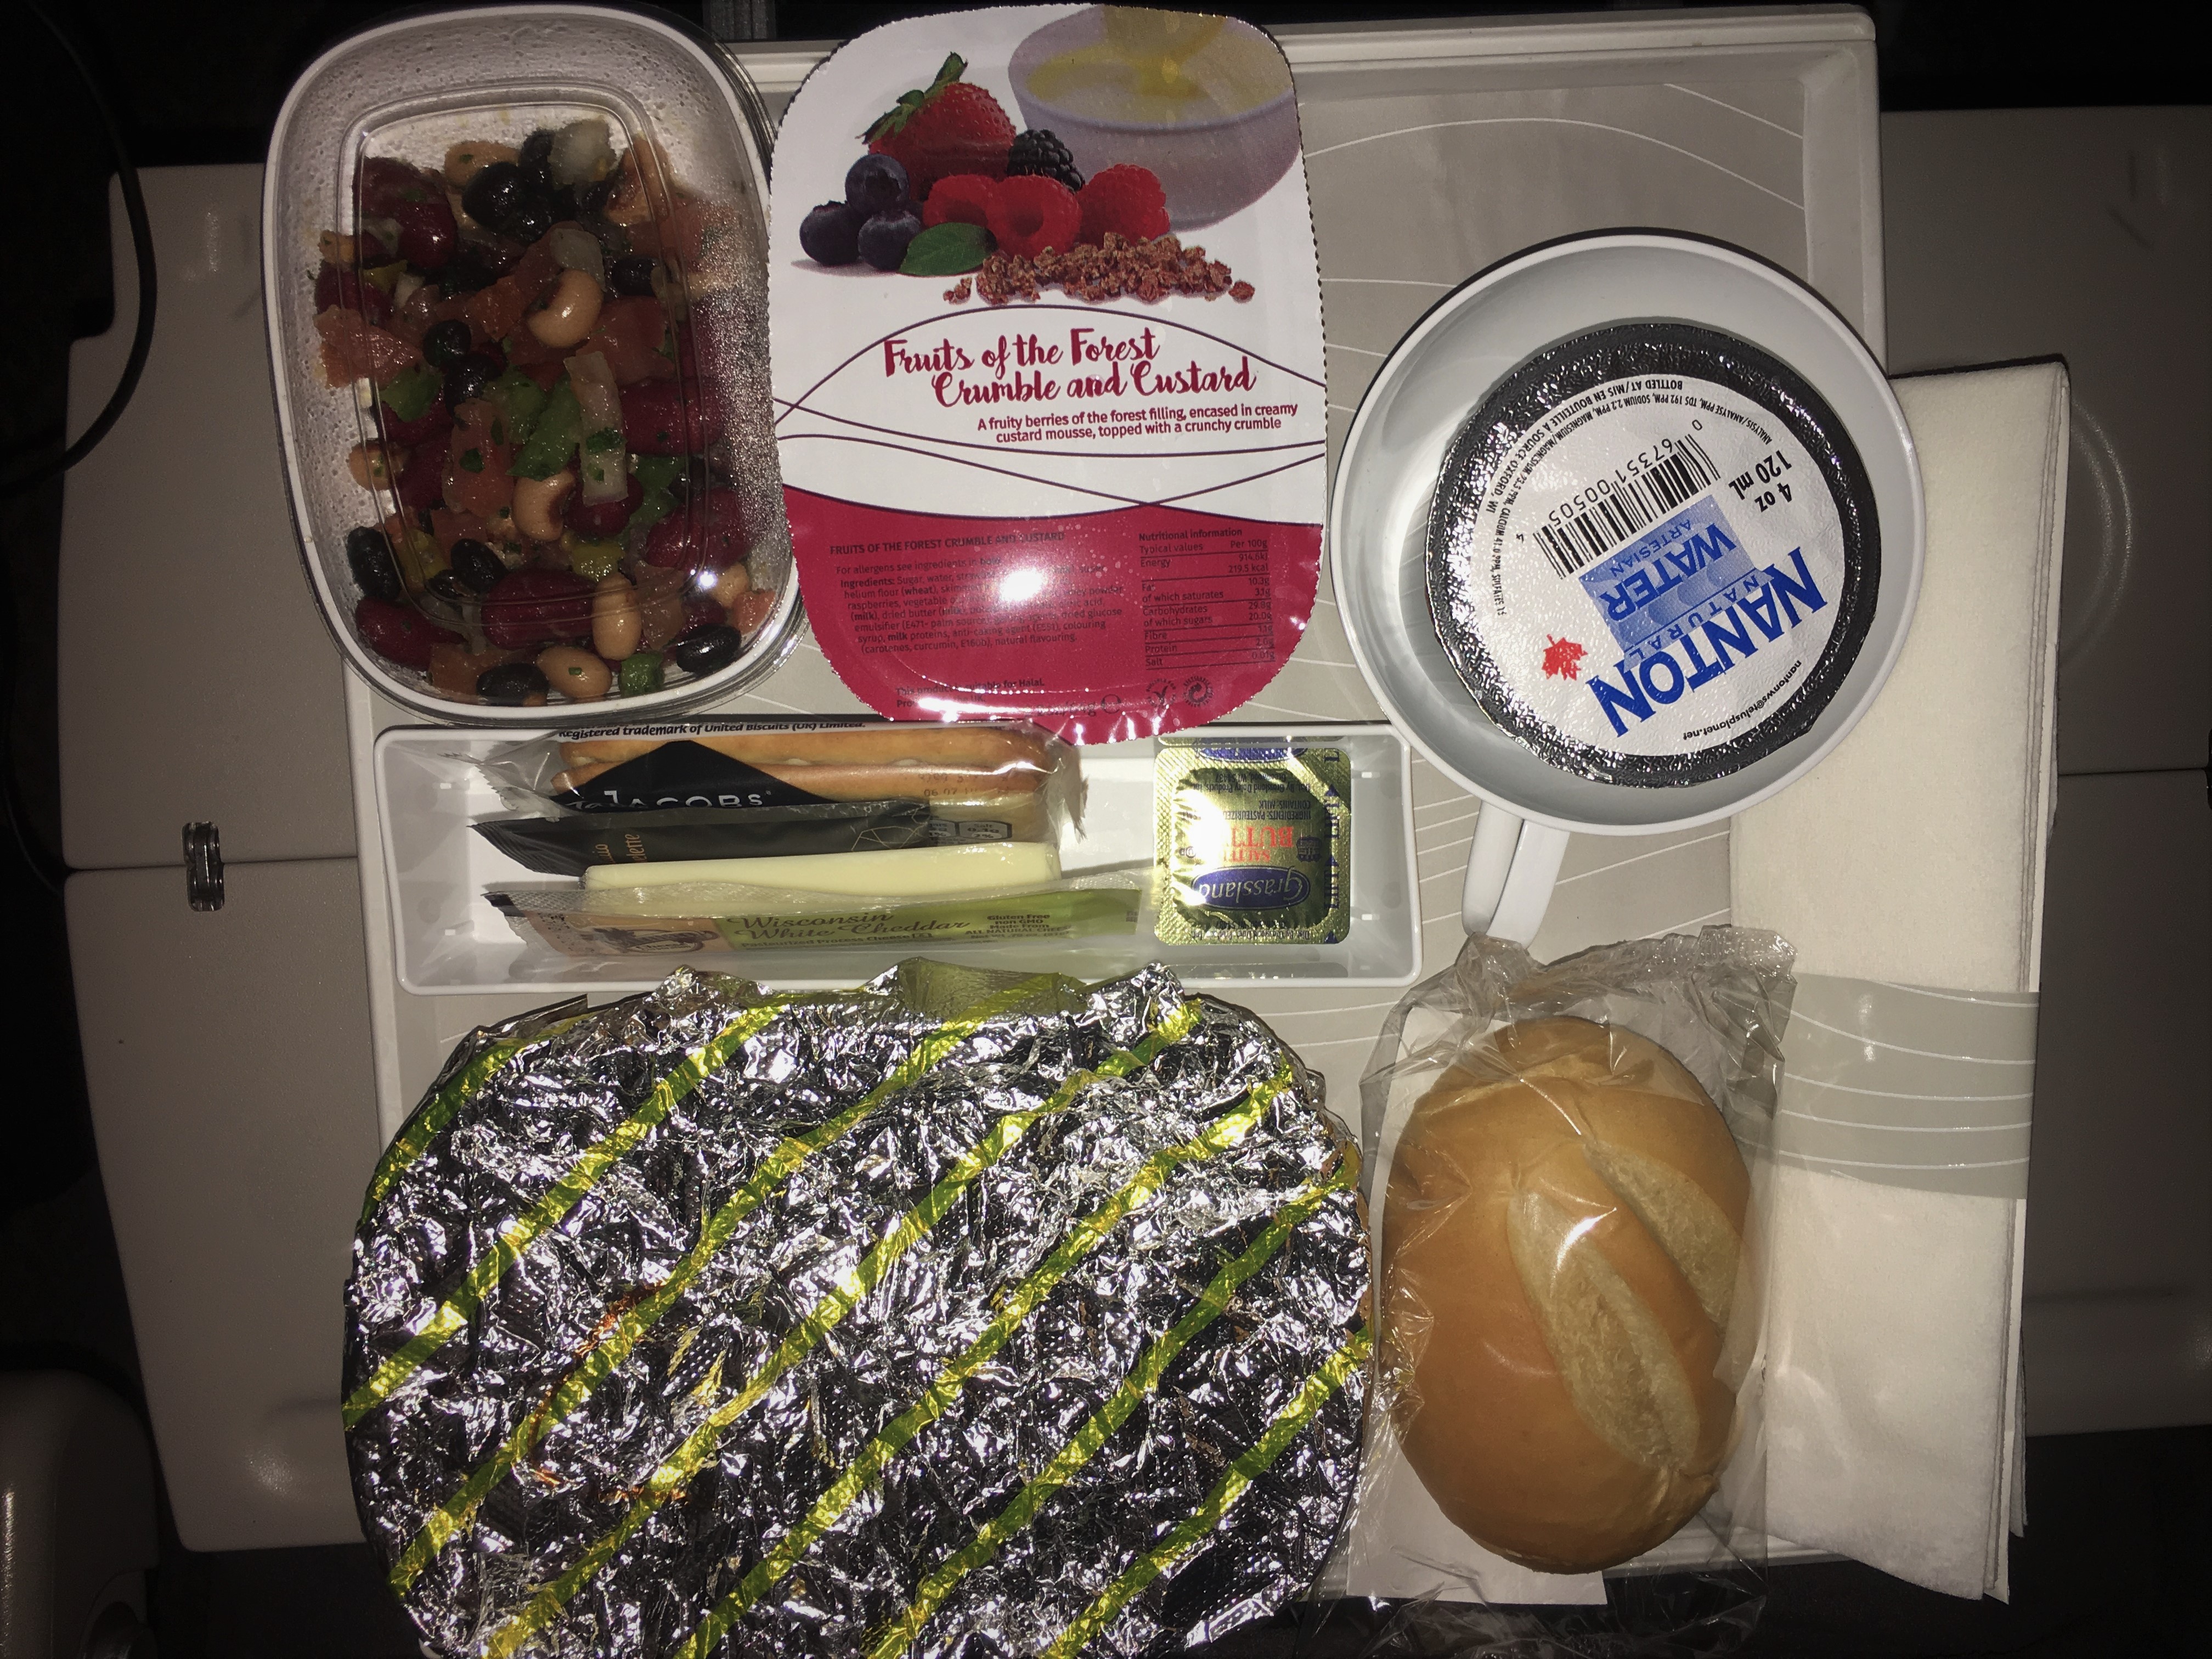 Emirates JFK-MPX Economy Class Meal